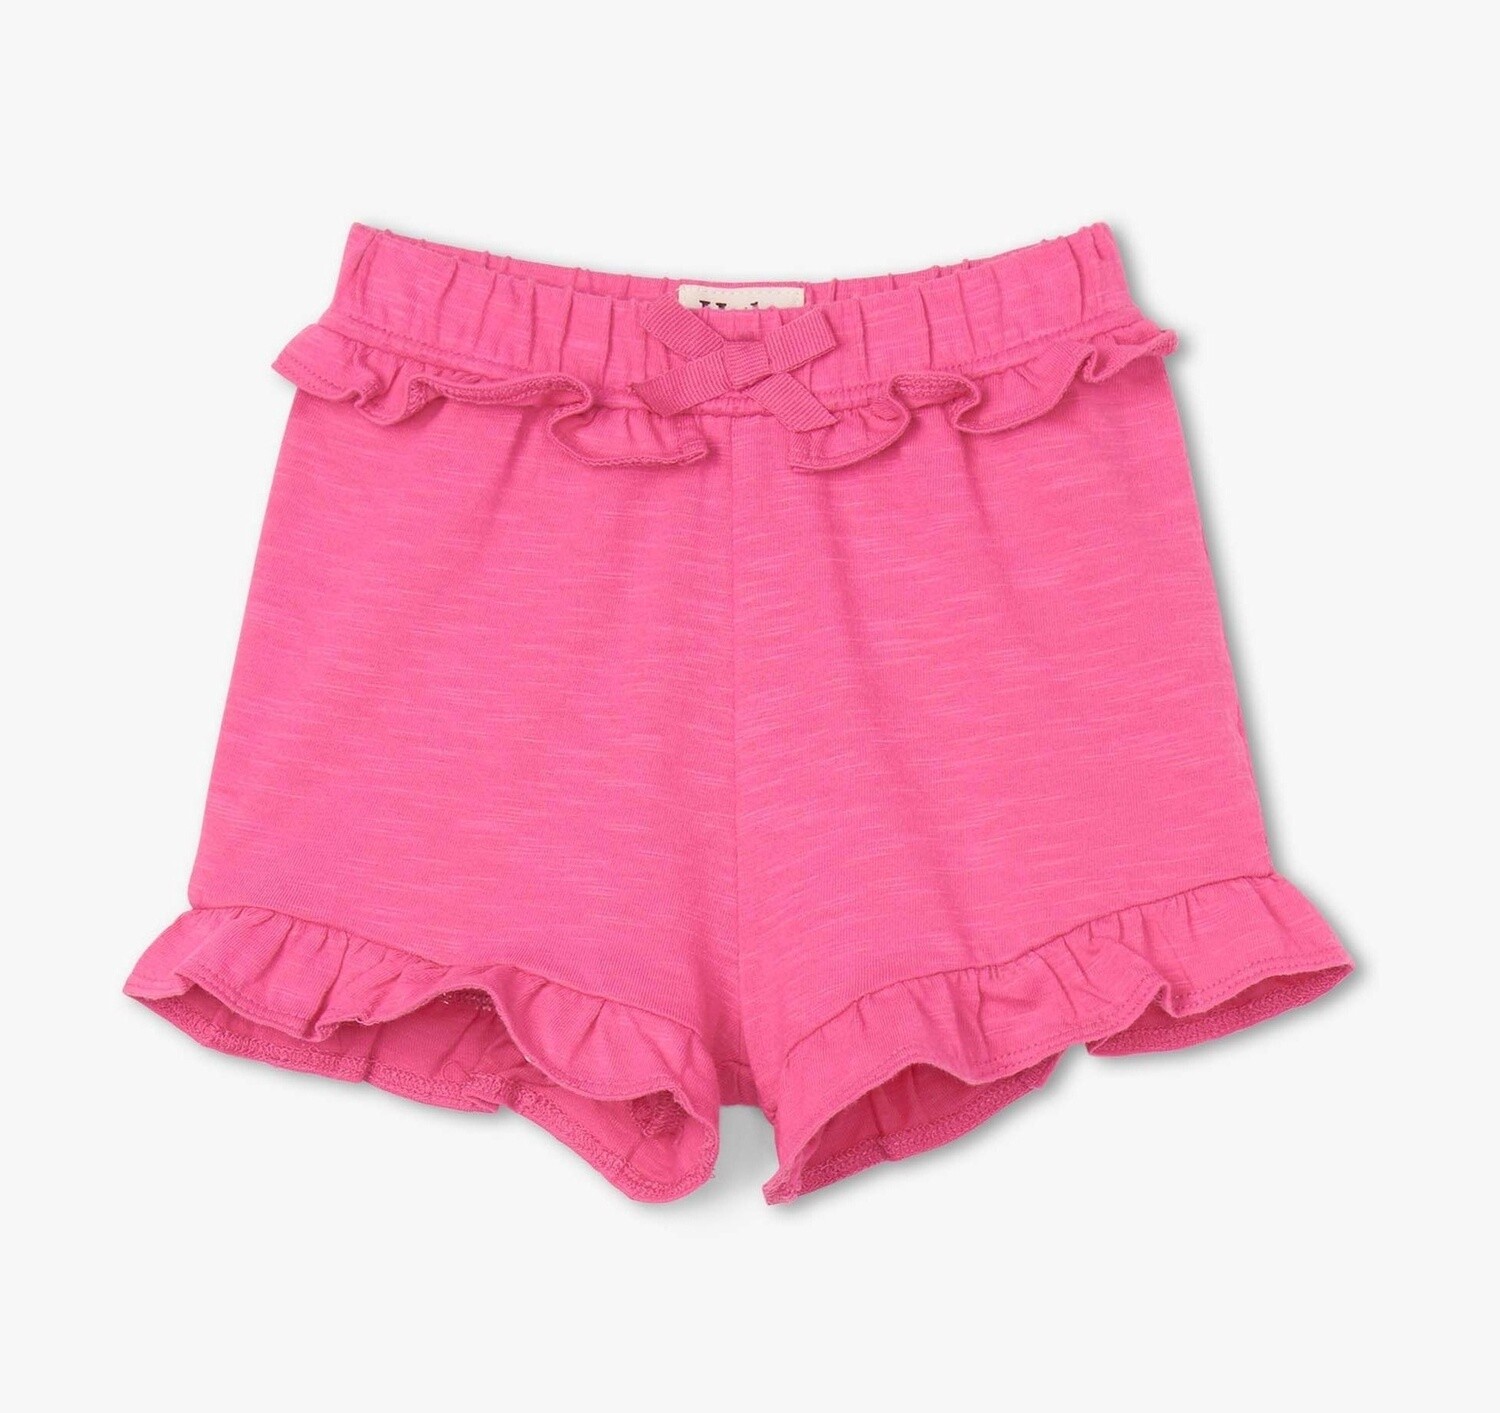 Hatley Pink Ruffle Baby Shorts